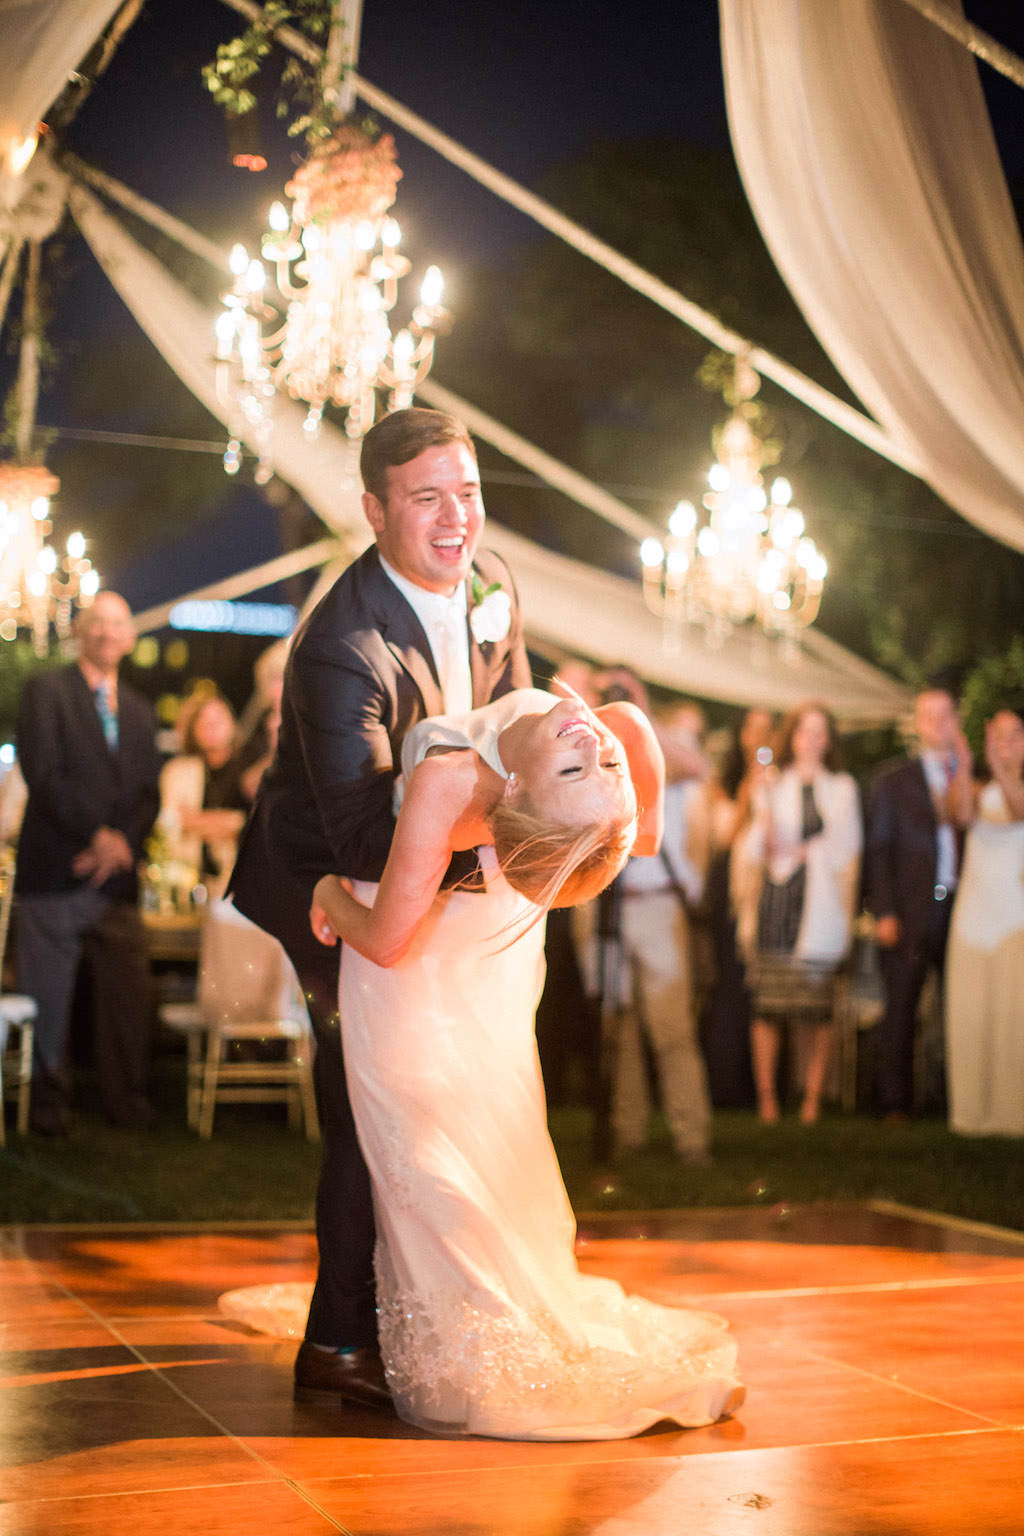 Florida Bride and Groom First Dance, Garden Wedding Reception